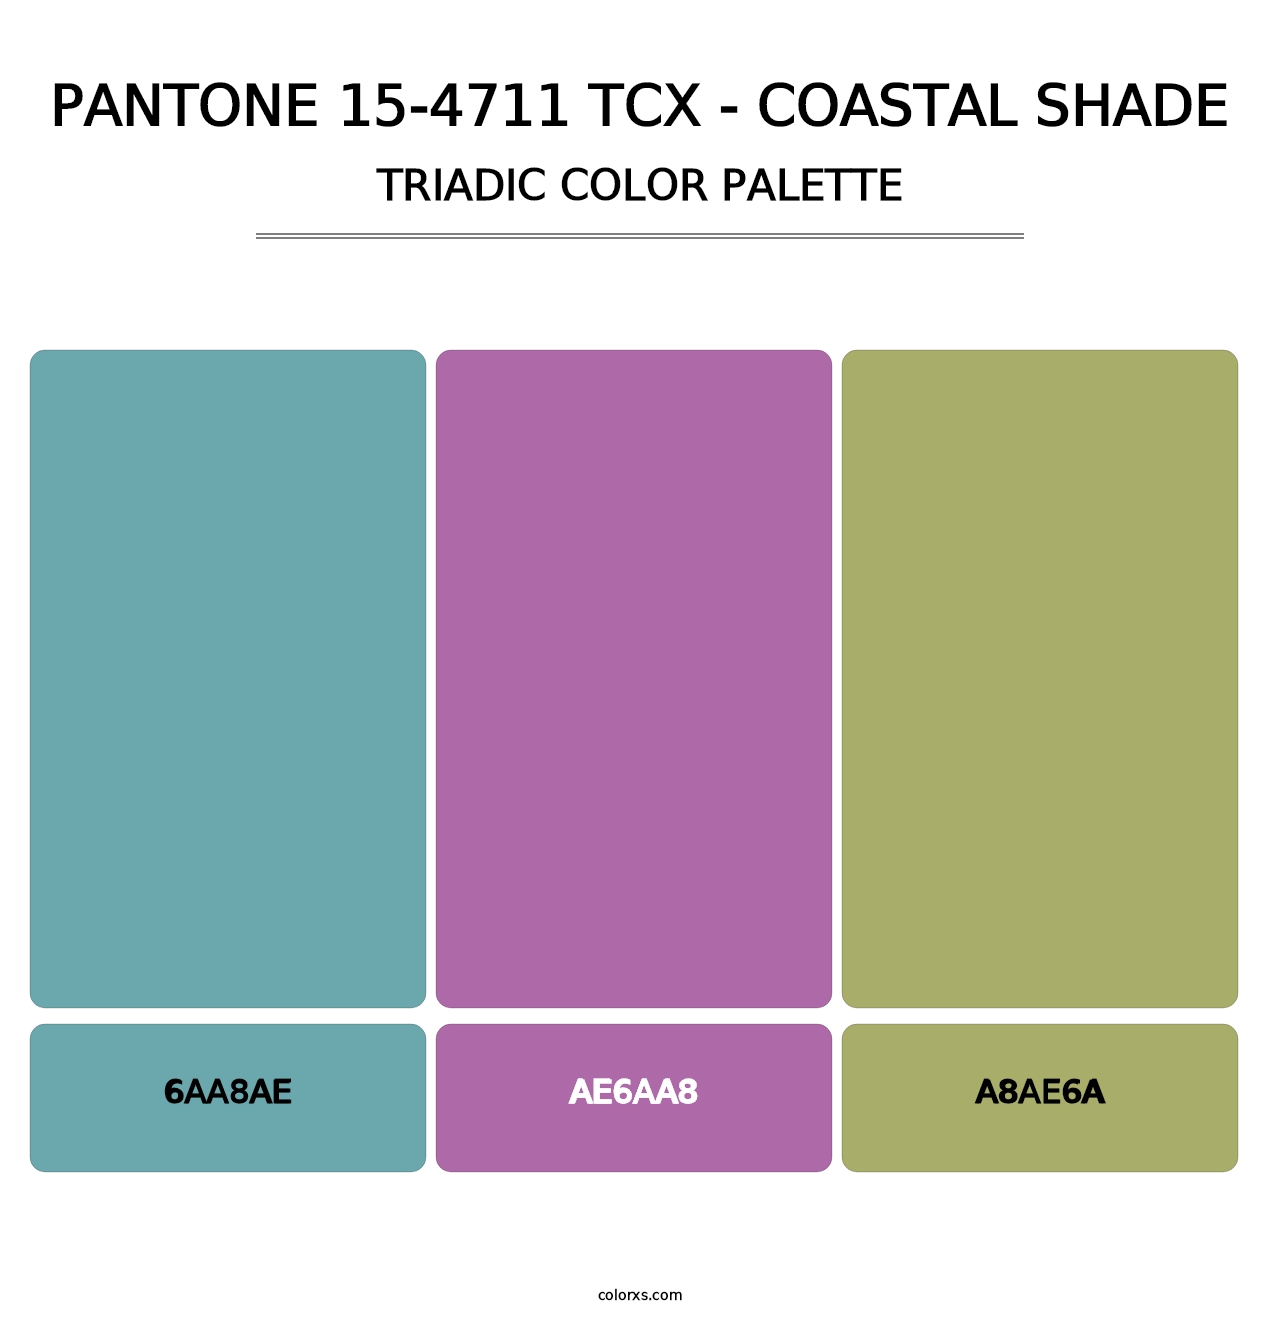 PANTONE 15-4711 TCX - Coastal Shade - Triadic Color Palette